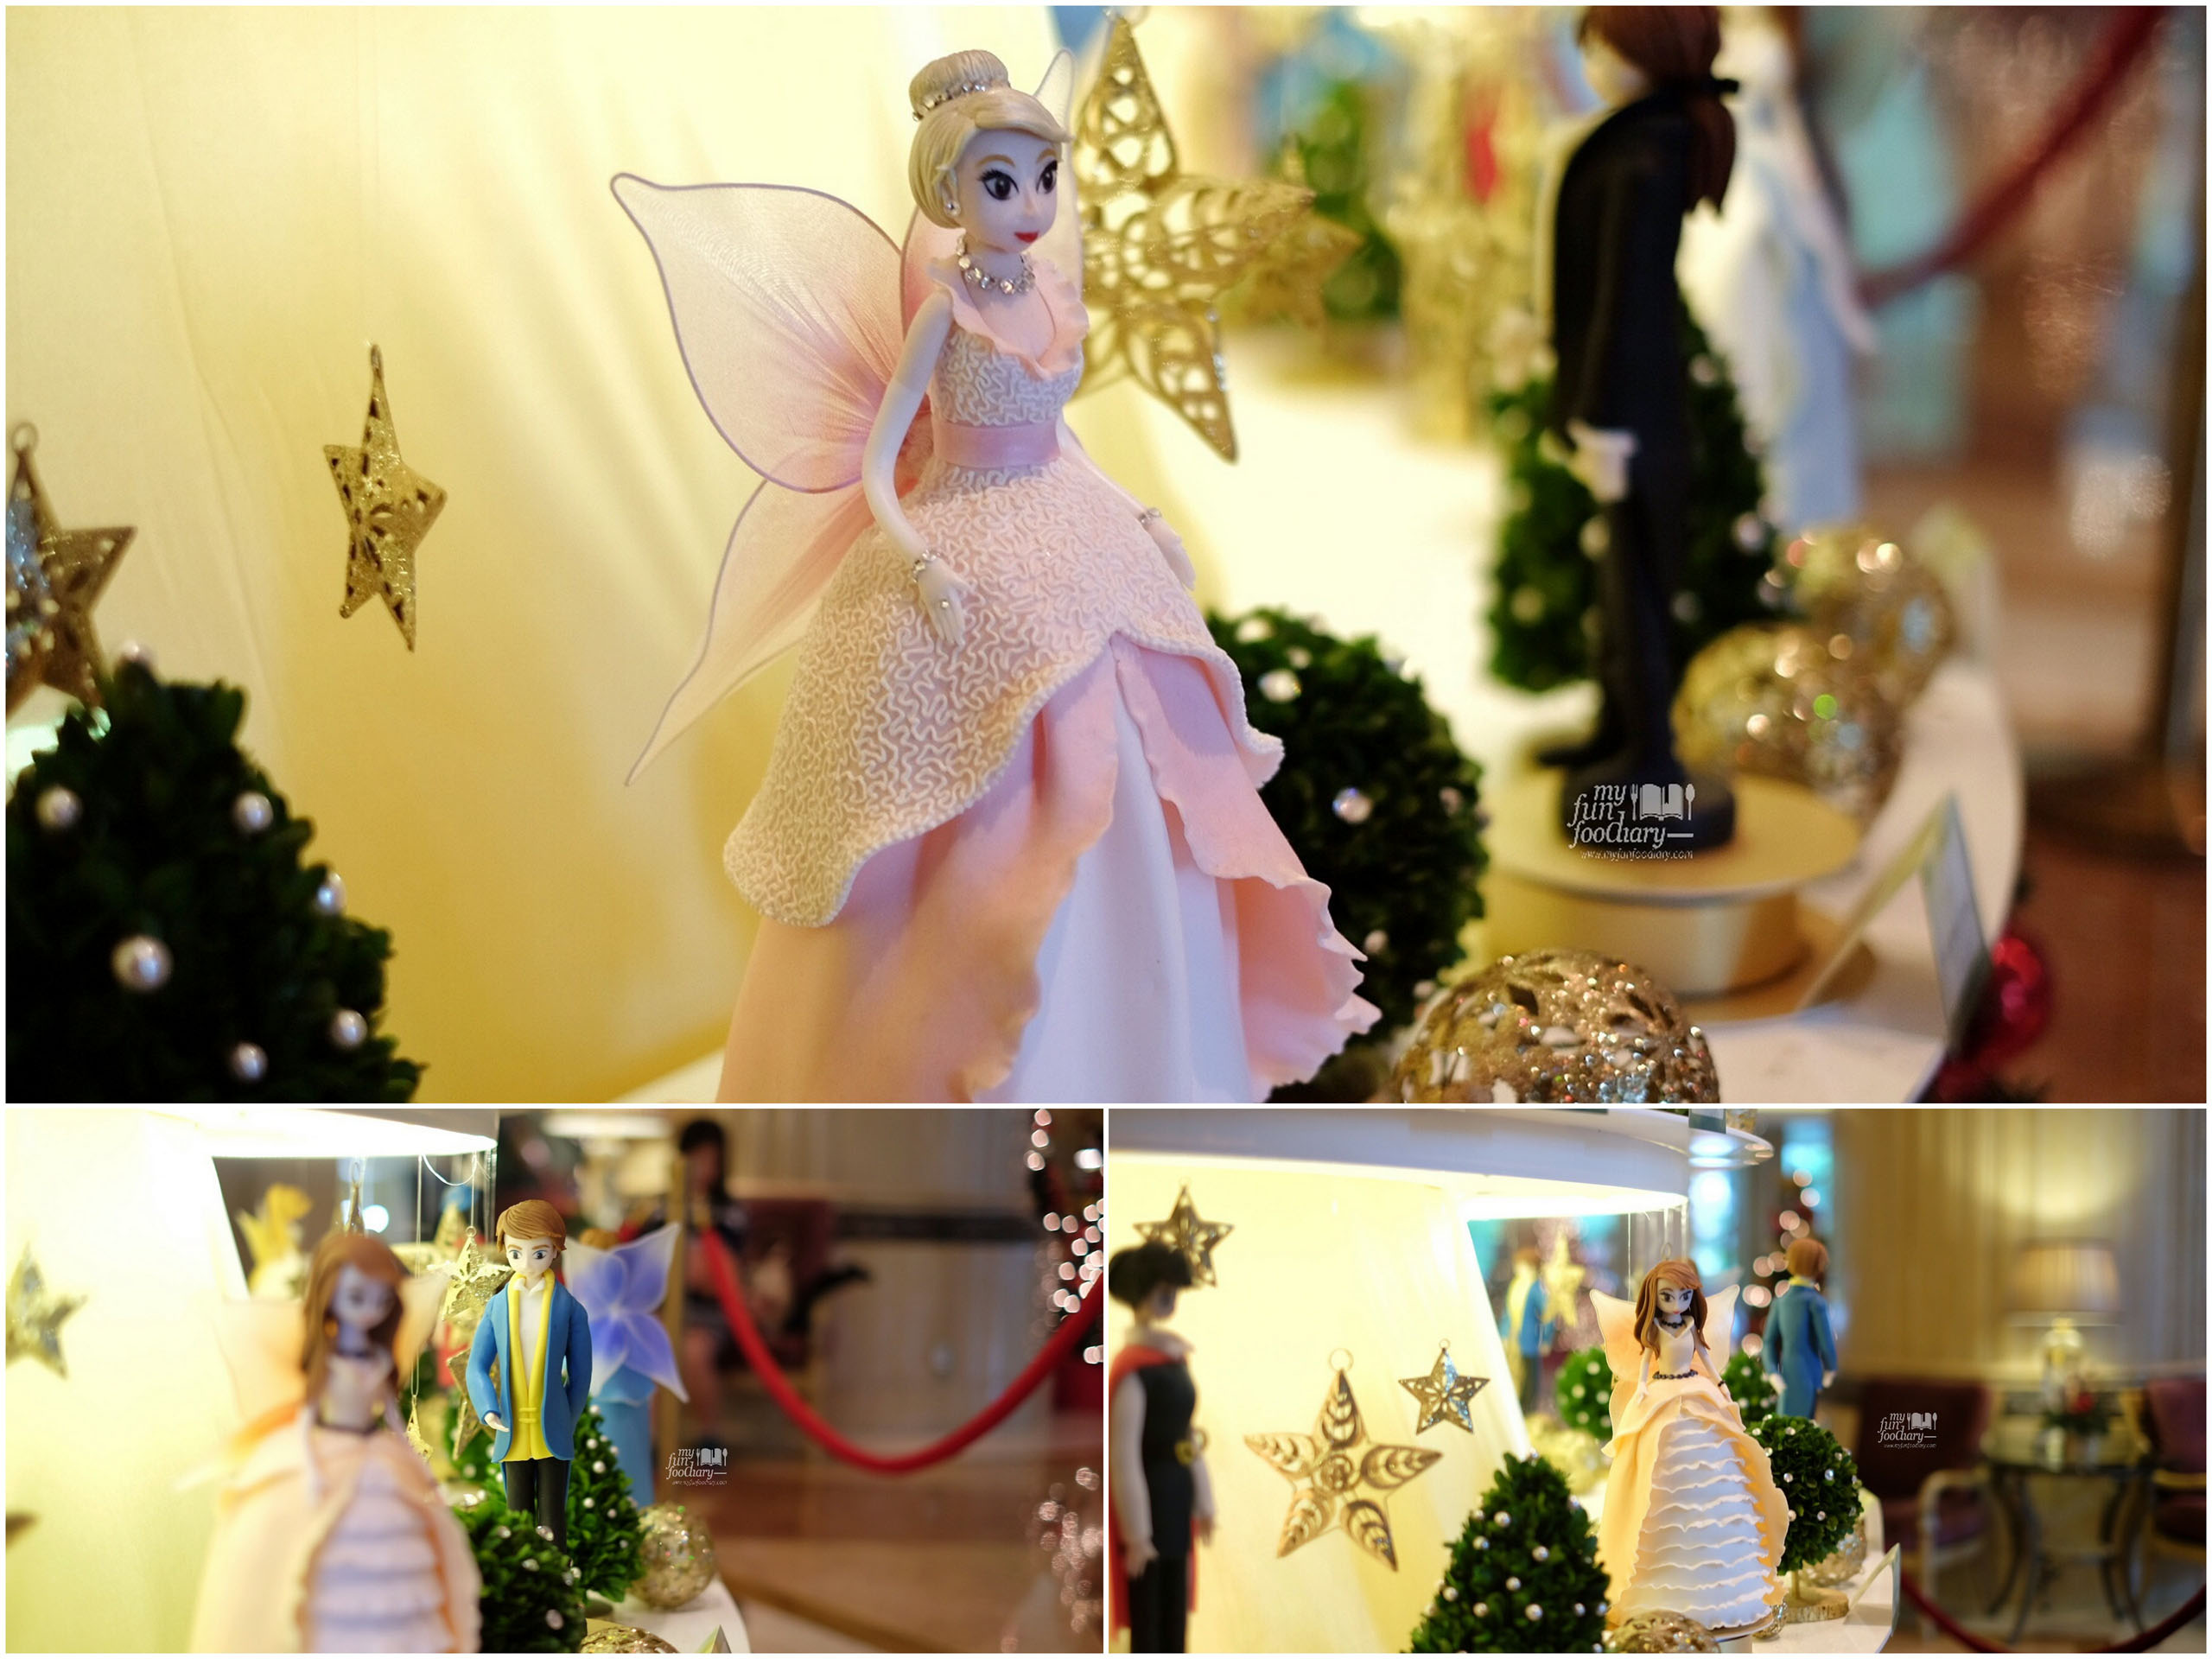 Adorable Princess and Prince - Once Upon A Christmas at Shangri-La Singapore by Myfunfoodiary 01